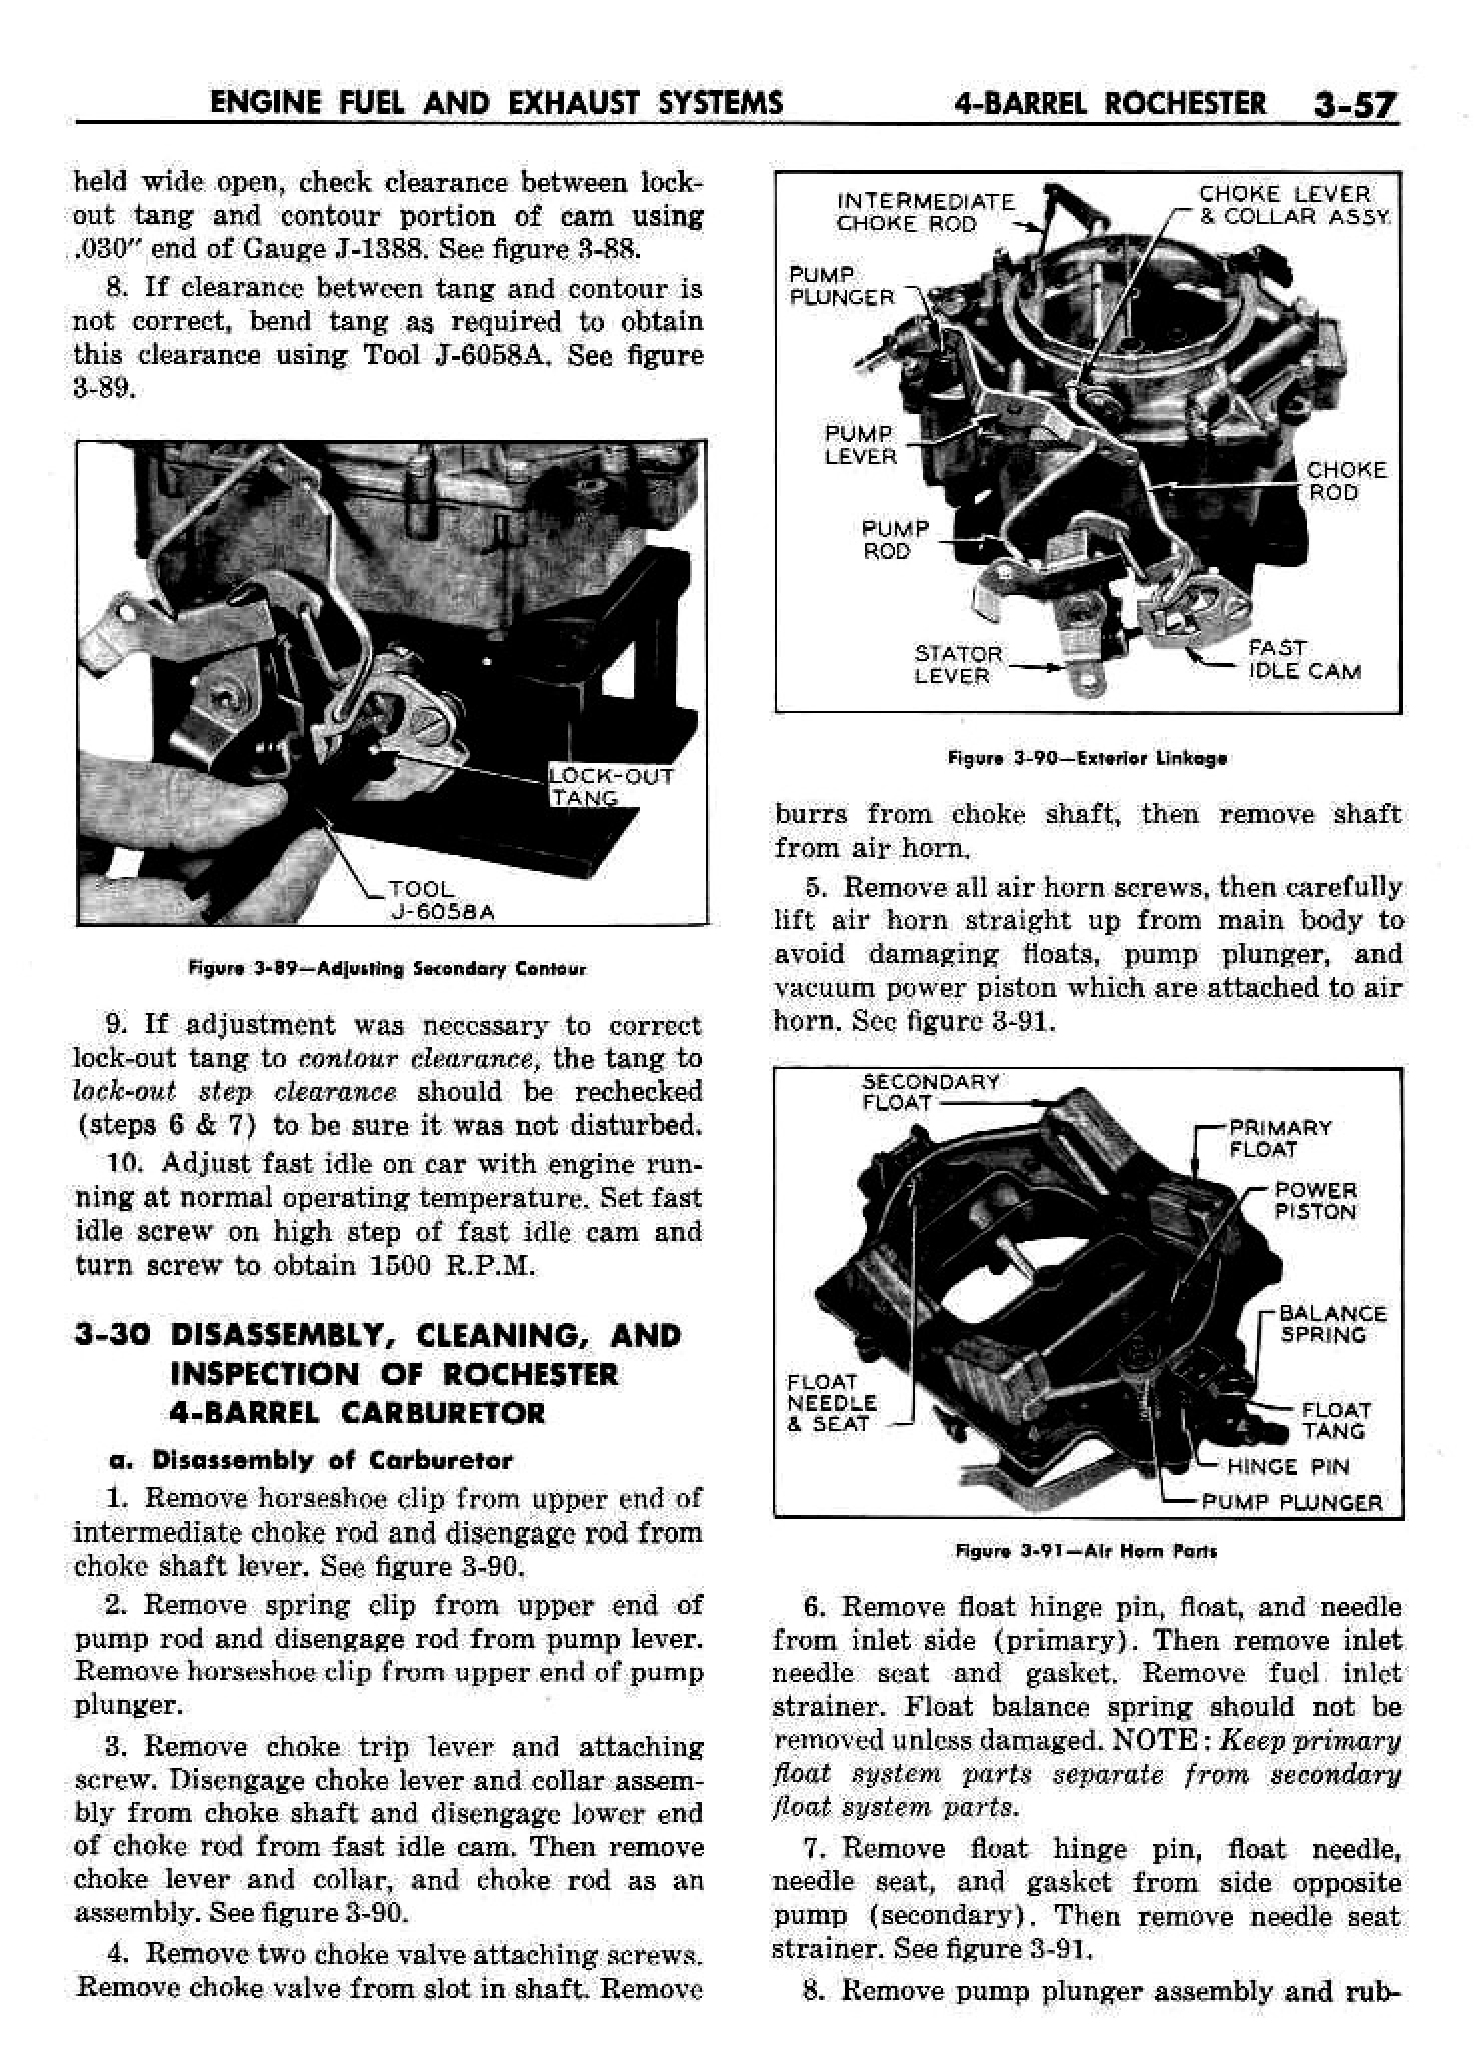 n_04 1958 Buick Shop Manual - Engine Fuel & Exhaust_57.jpg